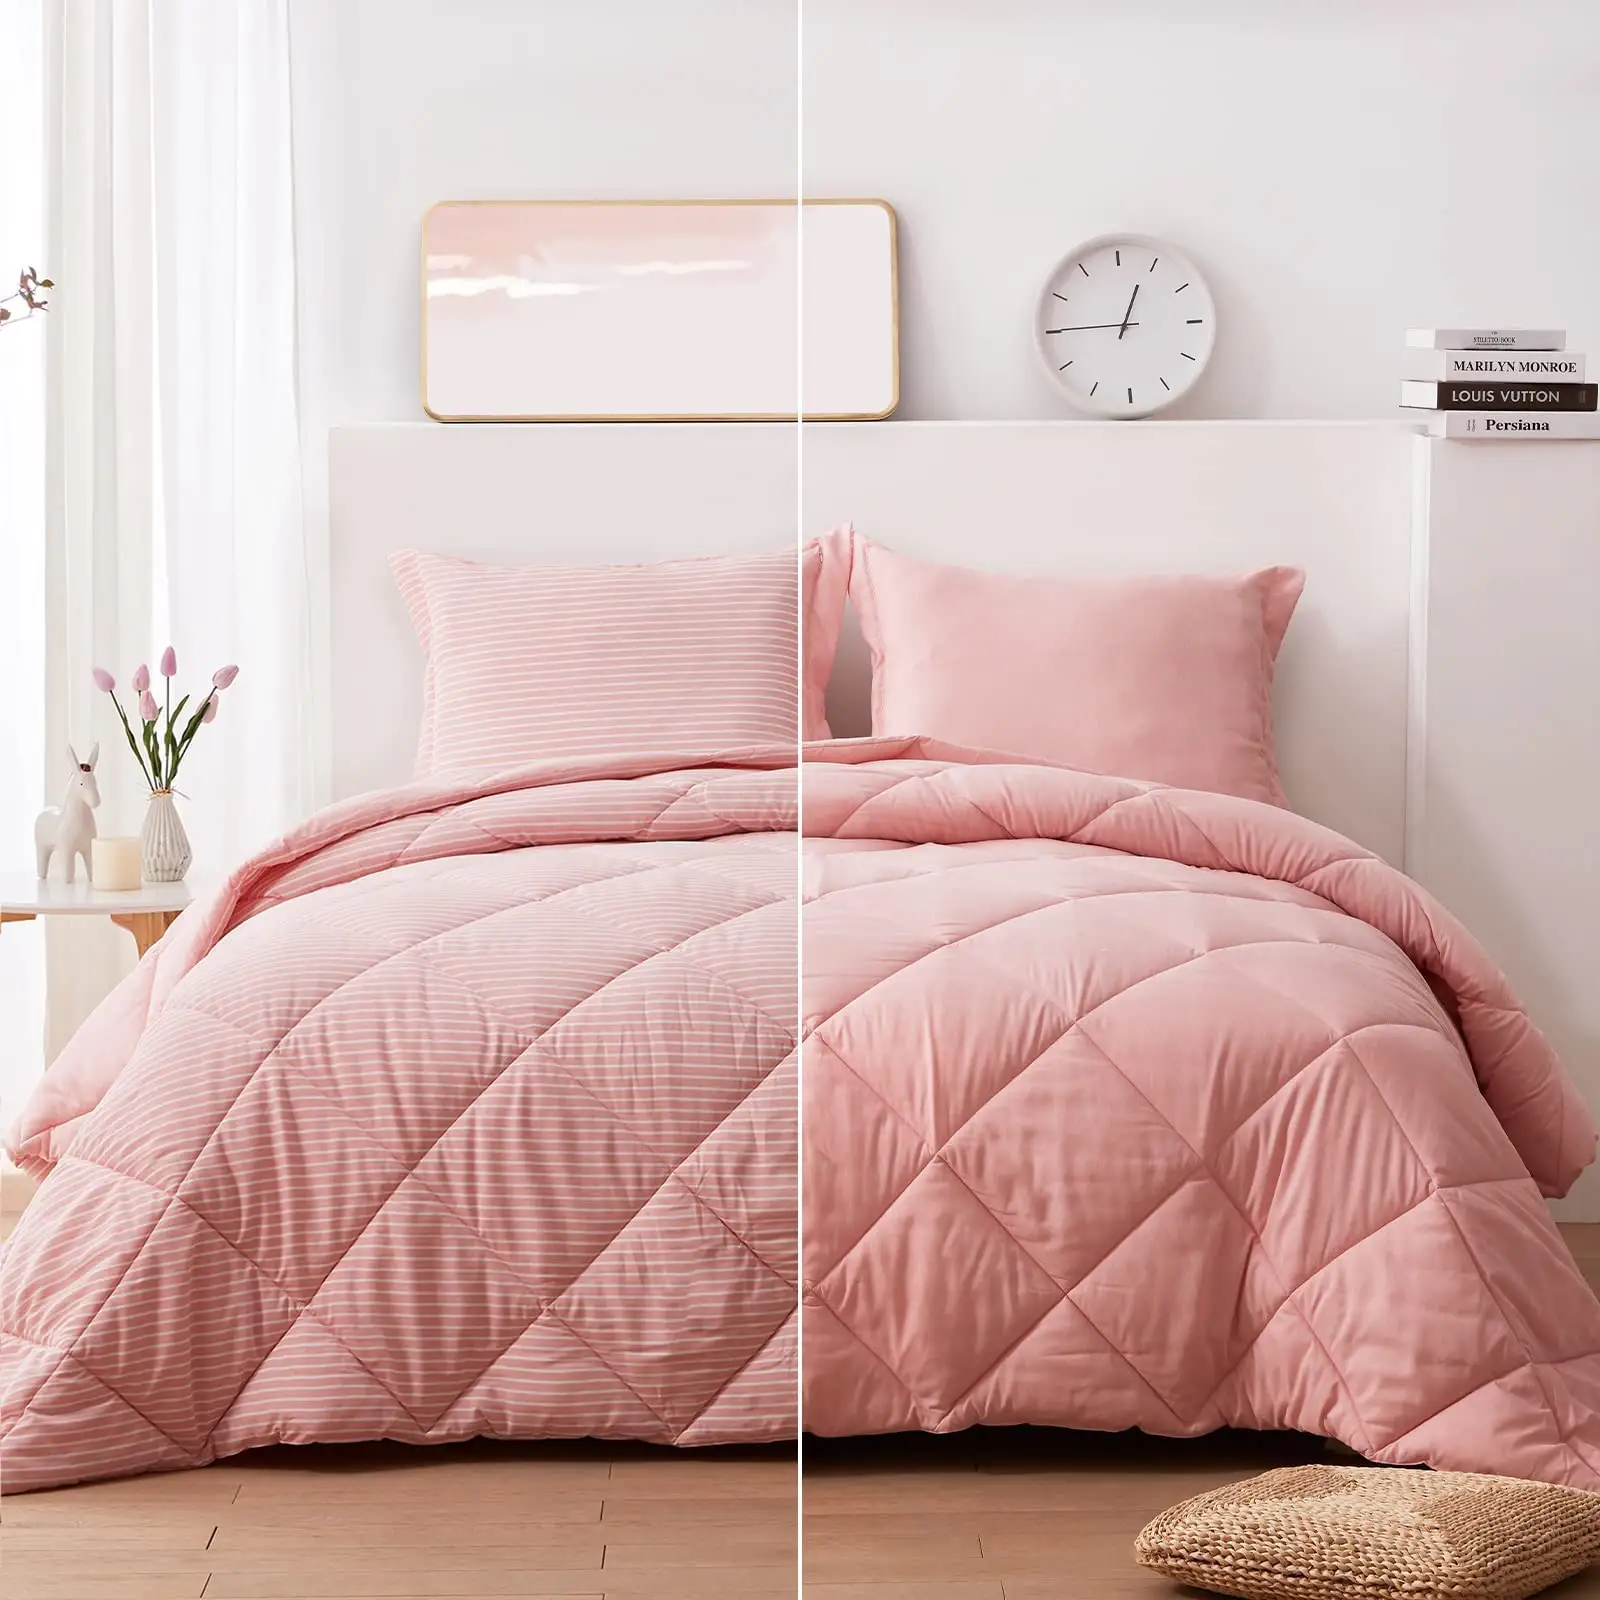 Yuchun Solid Color Stripes Sheet Sets Duvet Cover Luxury Designers Bedding Set Comforter